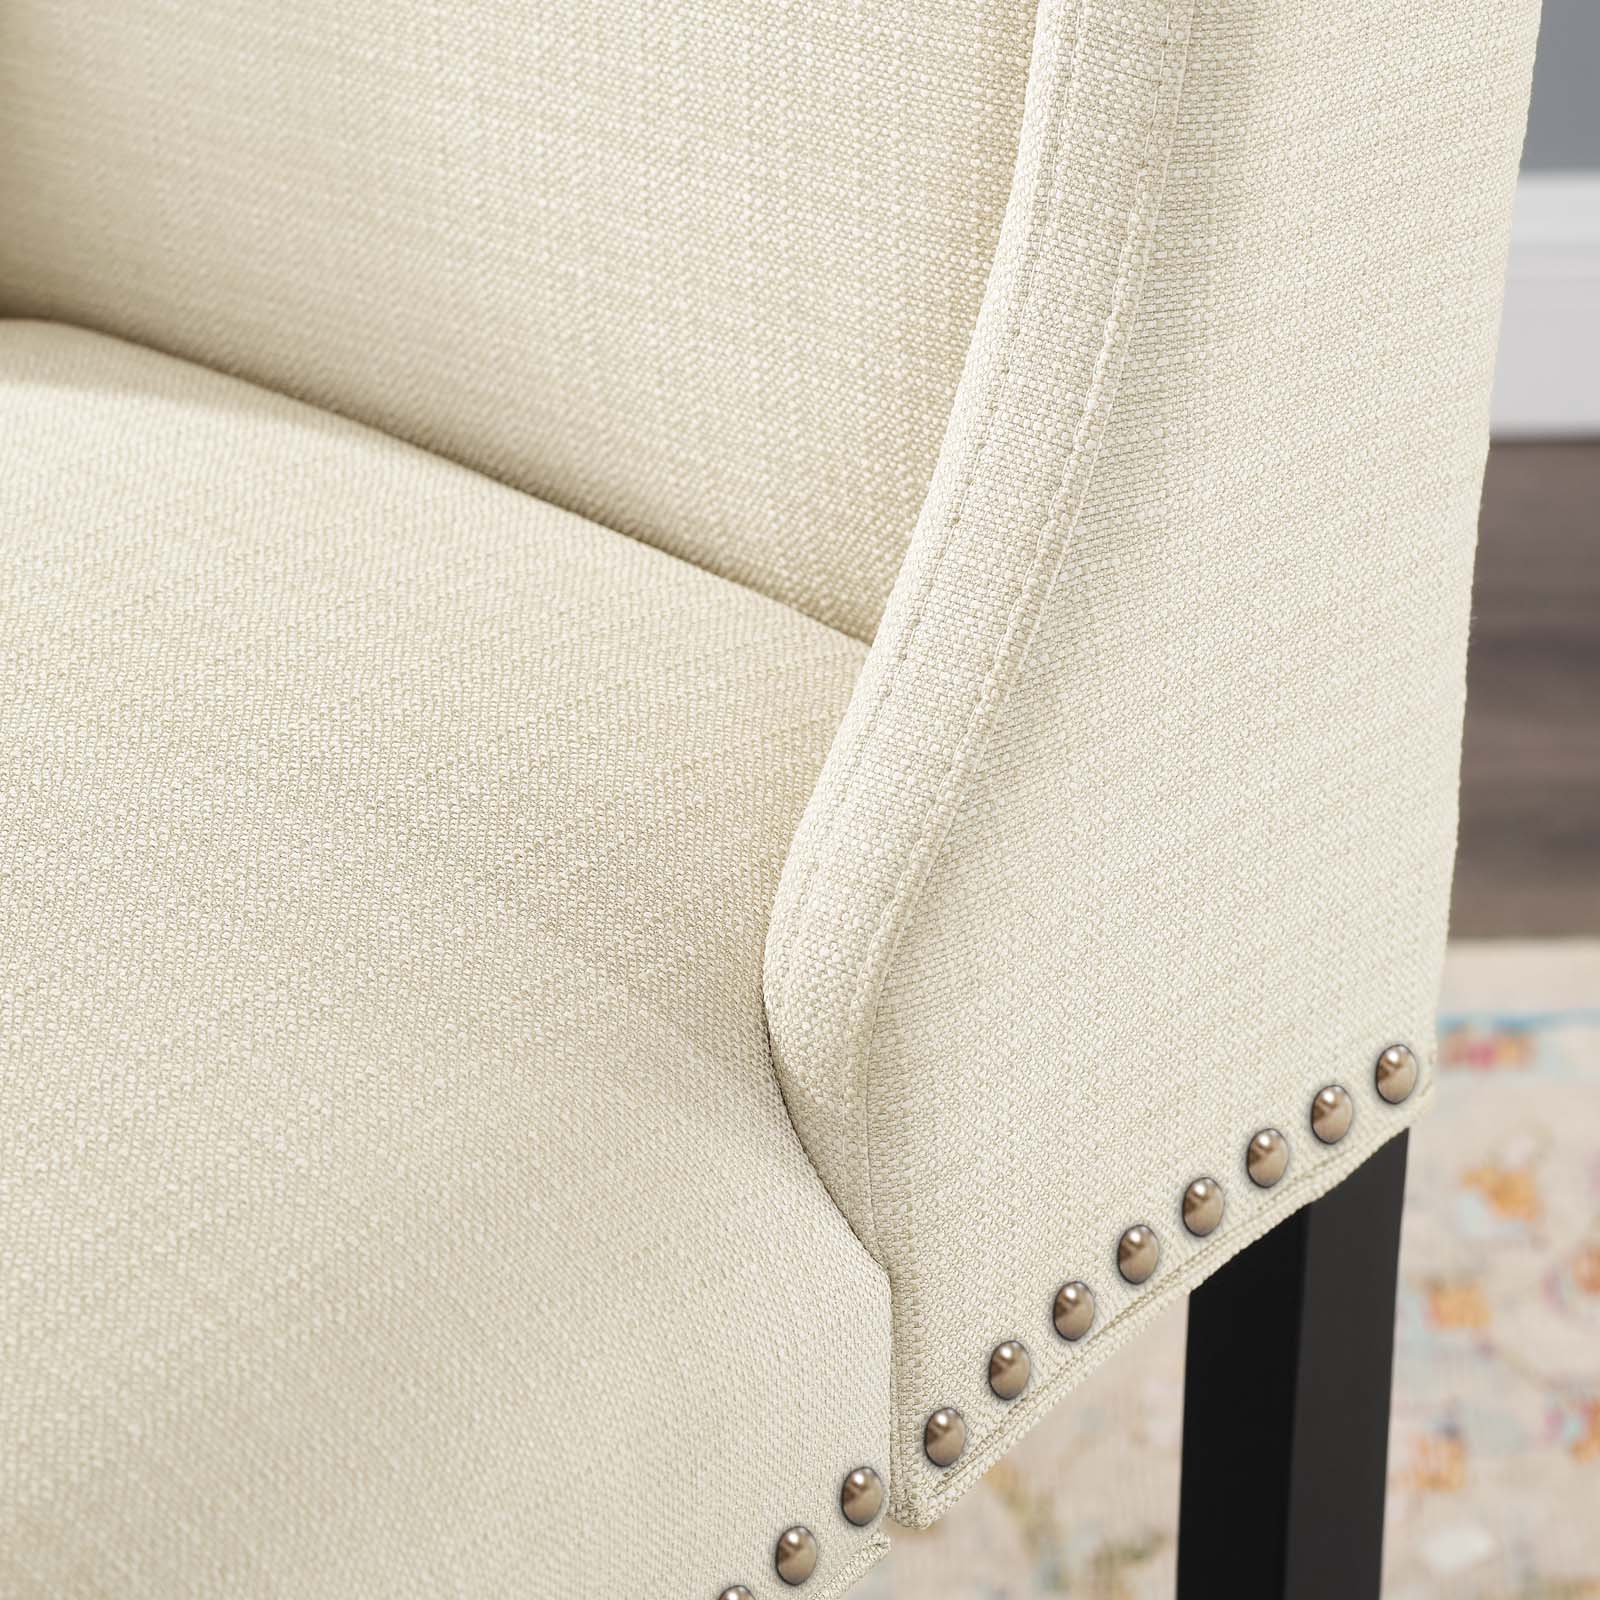 Baron Upholstered Fabric Counter Stool - East Shore Modern Home Furnishings